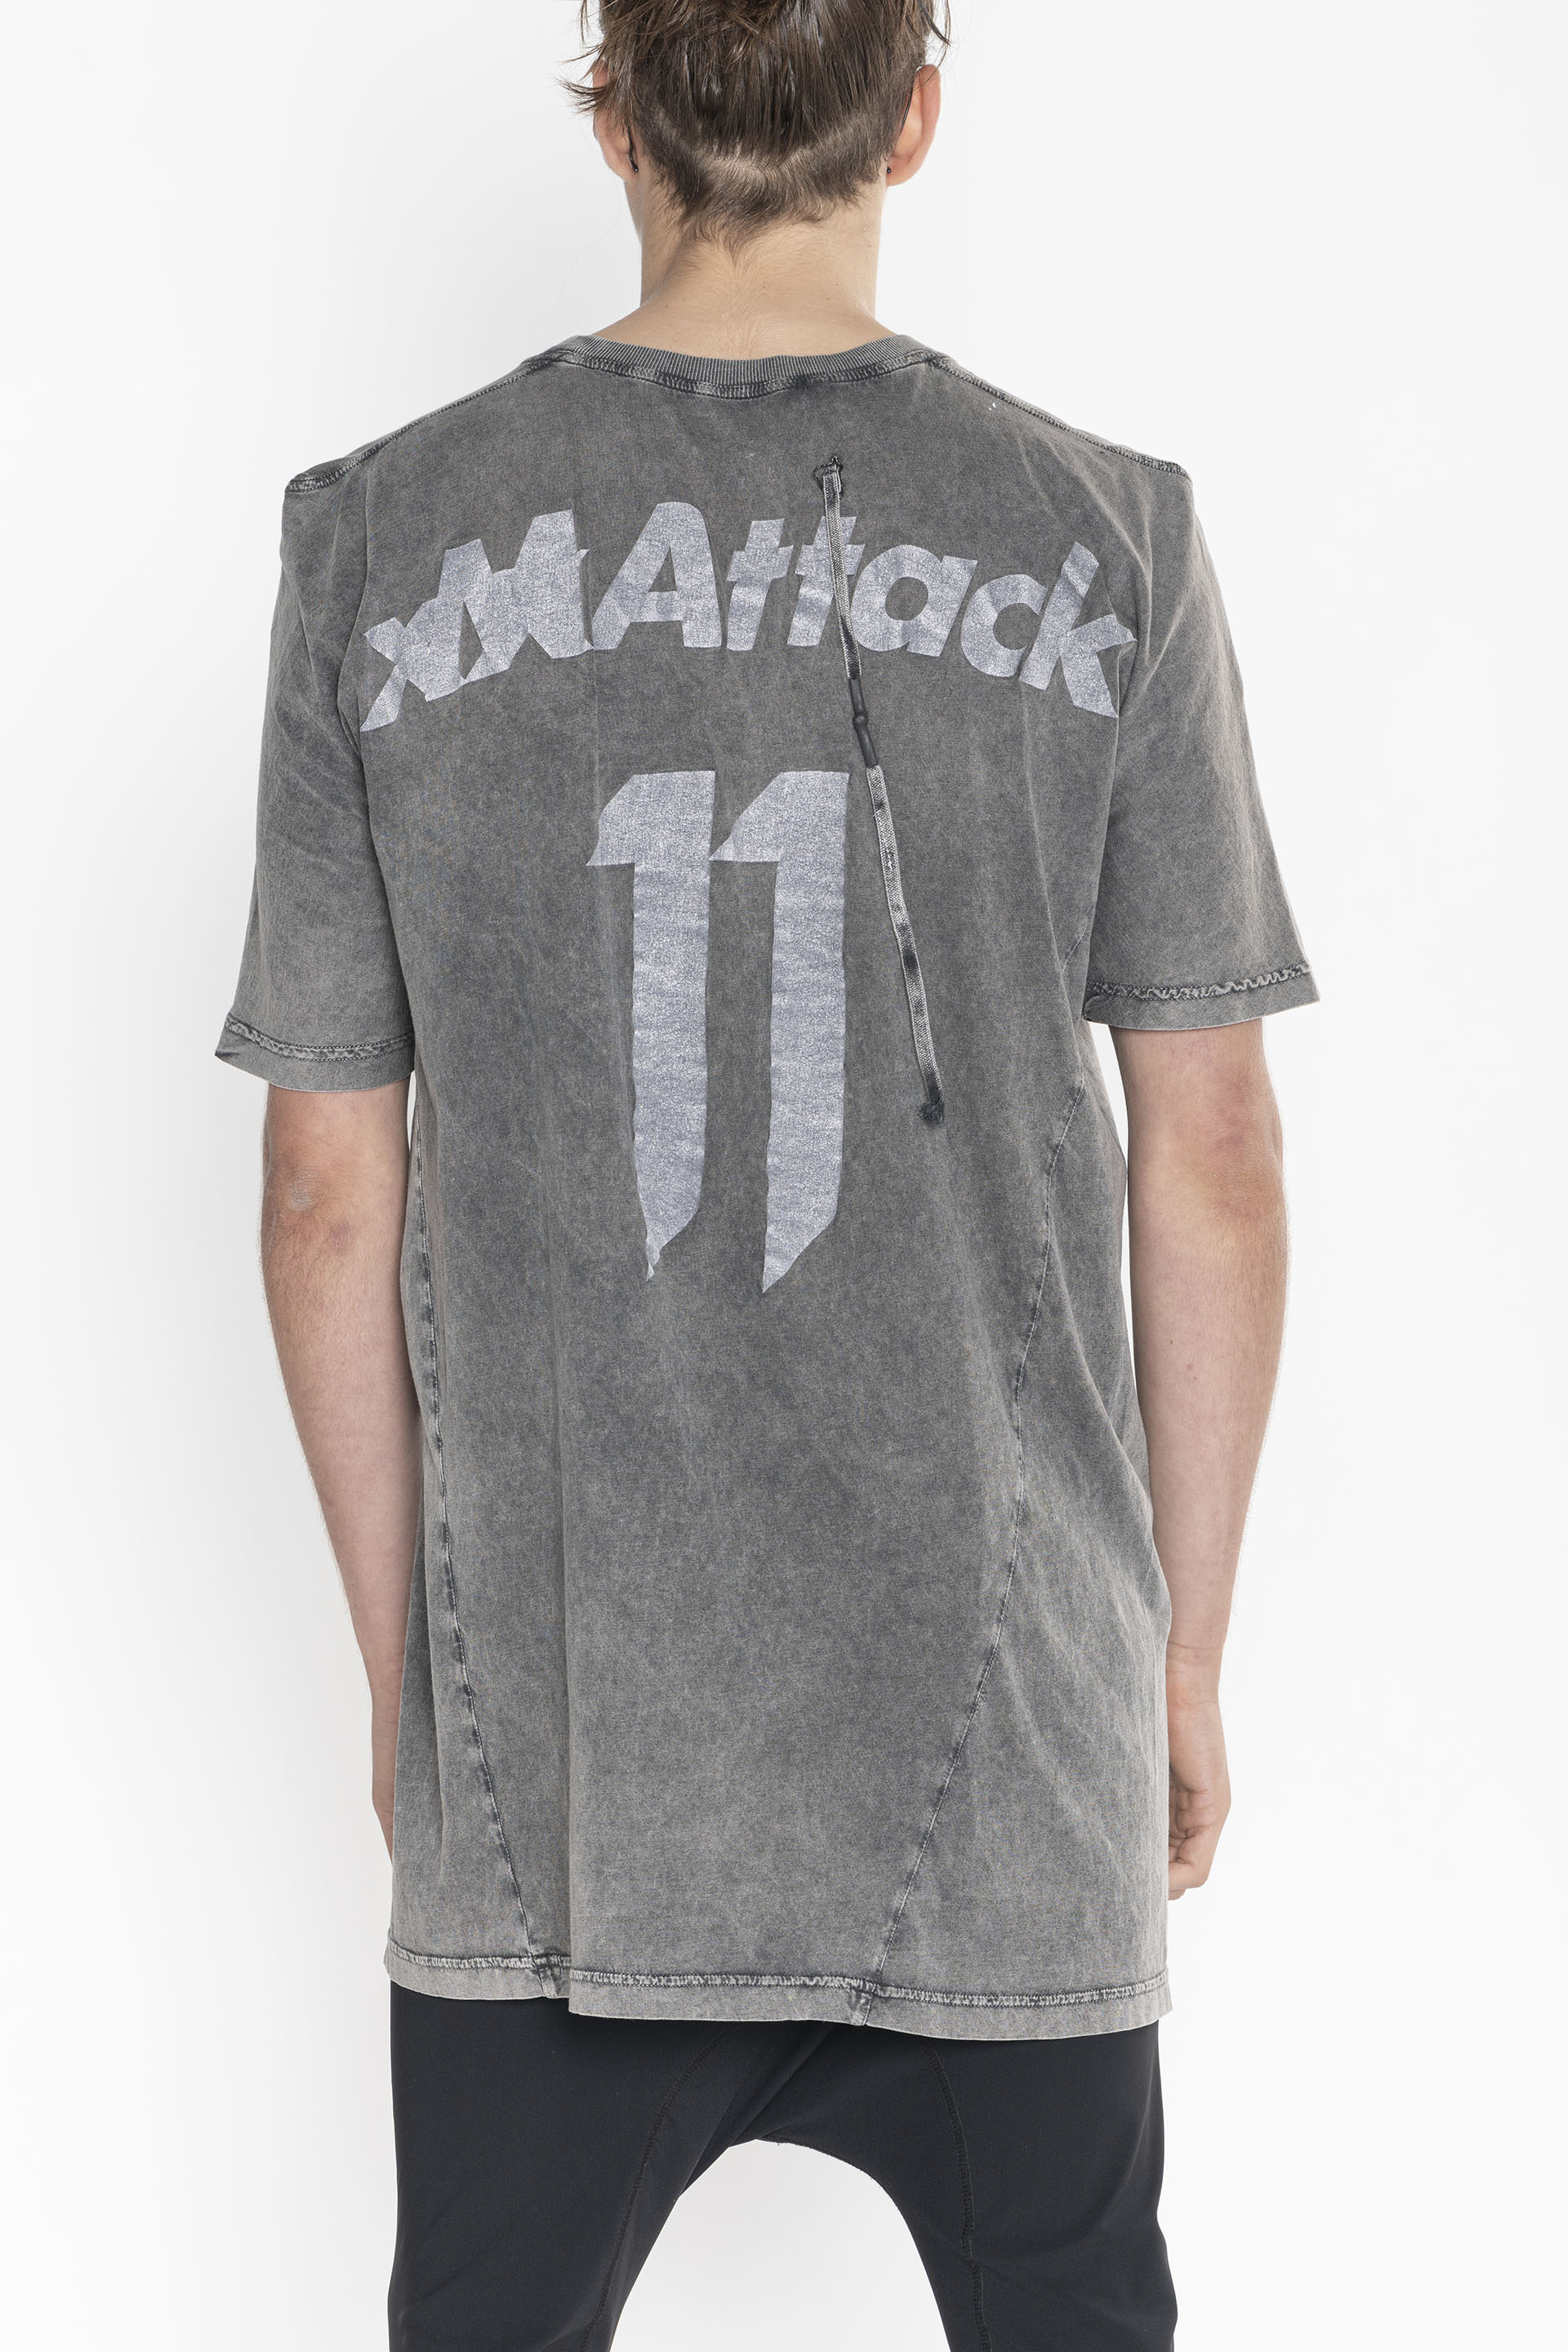 Massive Attack Washed Grey T-Shirt